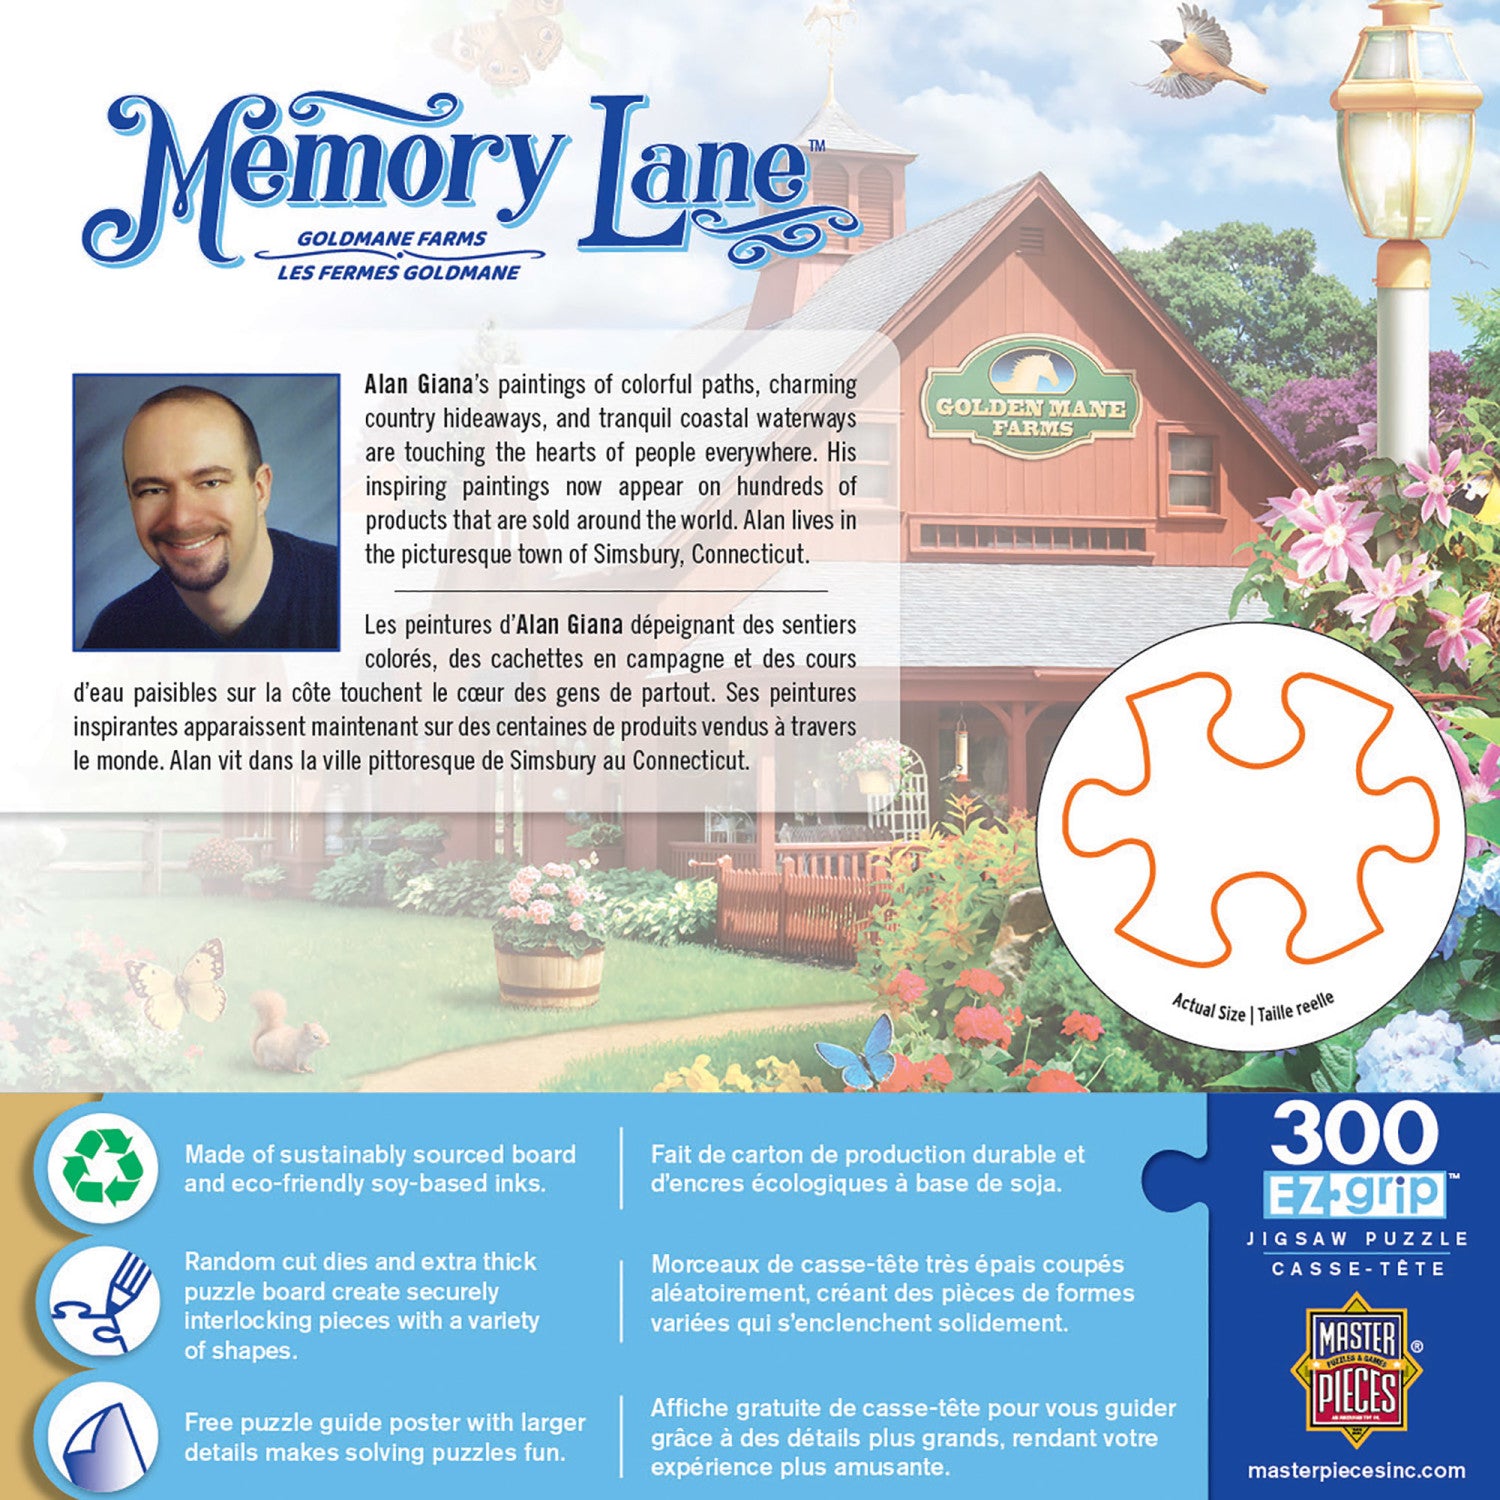 Memory Lane - Goldmane Farms 300 Piece EZ Grip Jigsaw Puzzle